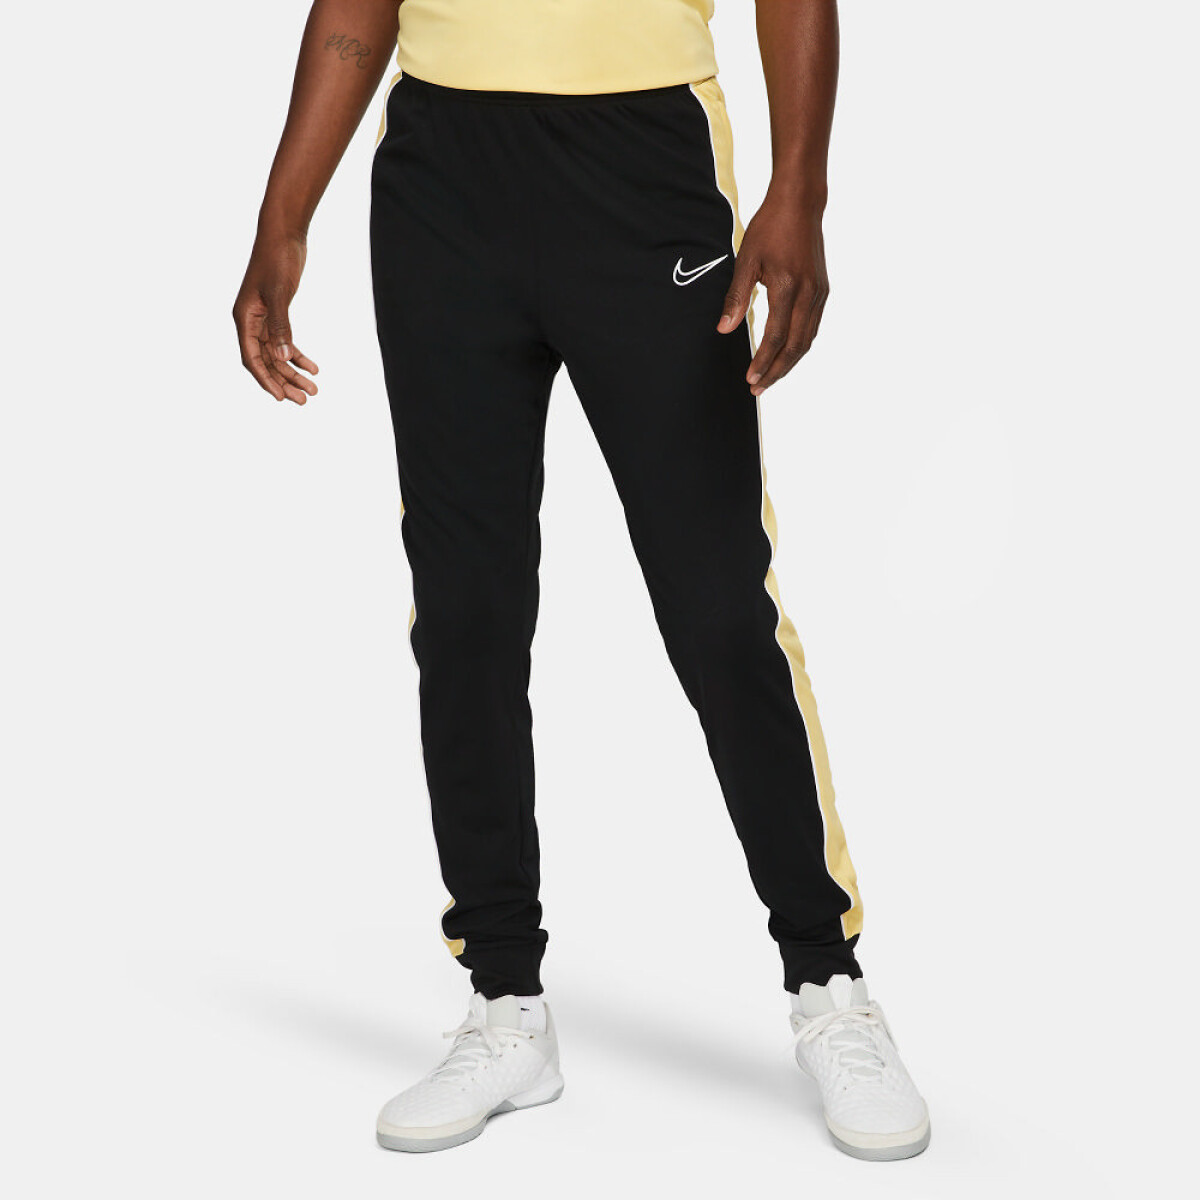 Pantalon Nike Futbol Hombre Acd - Color Único 